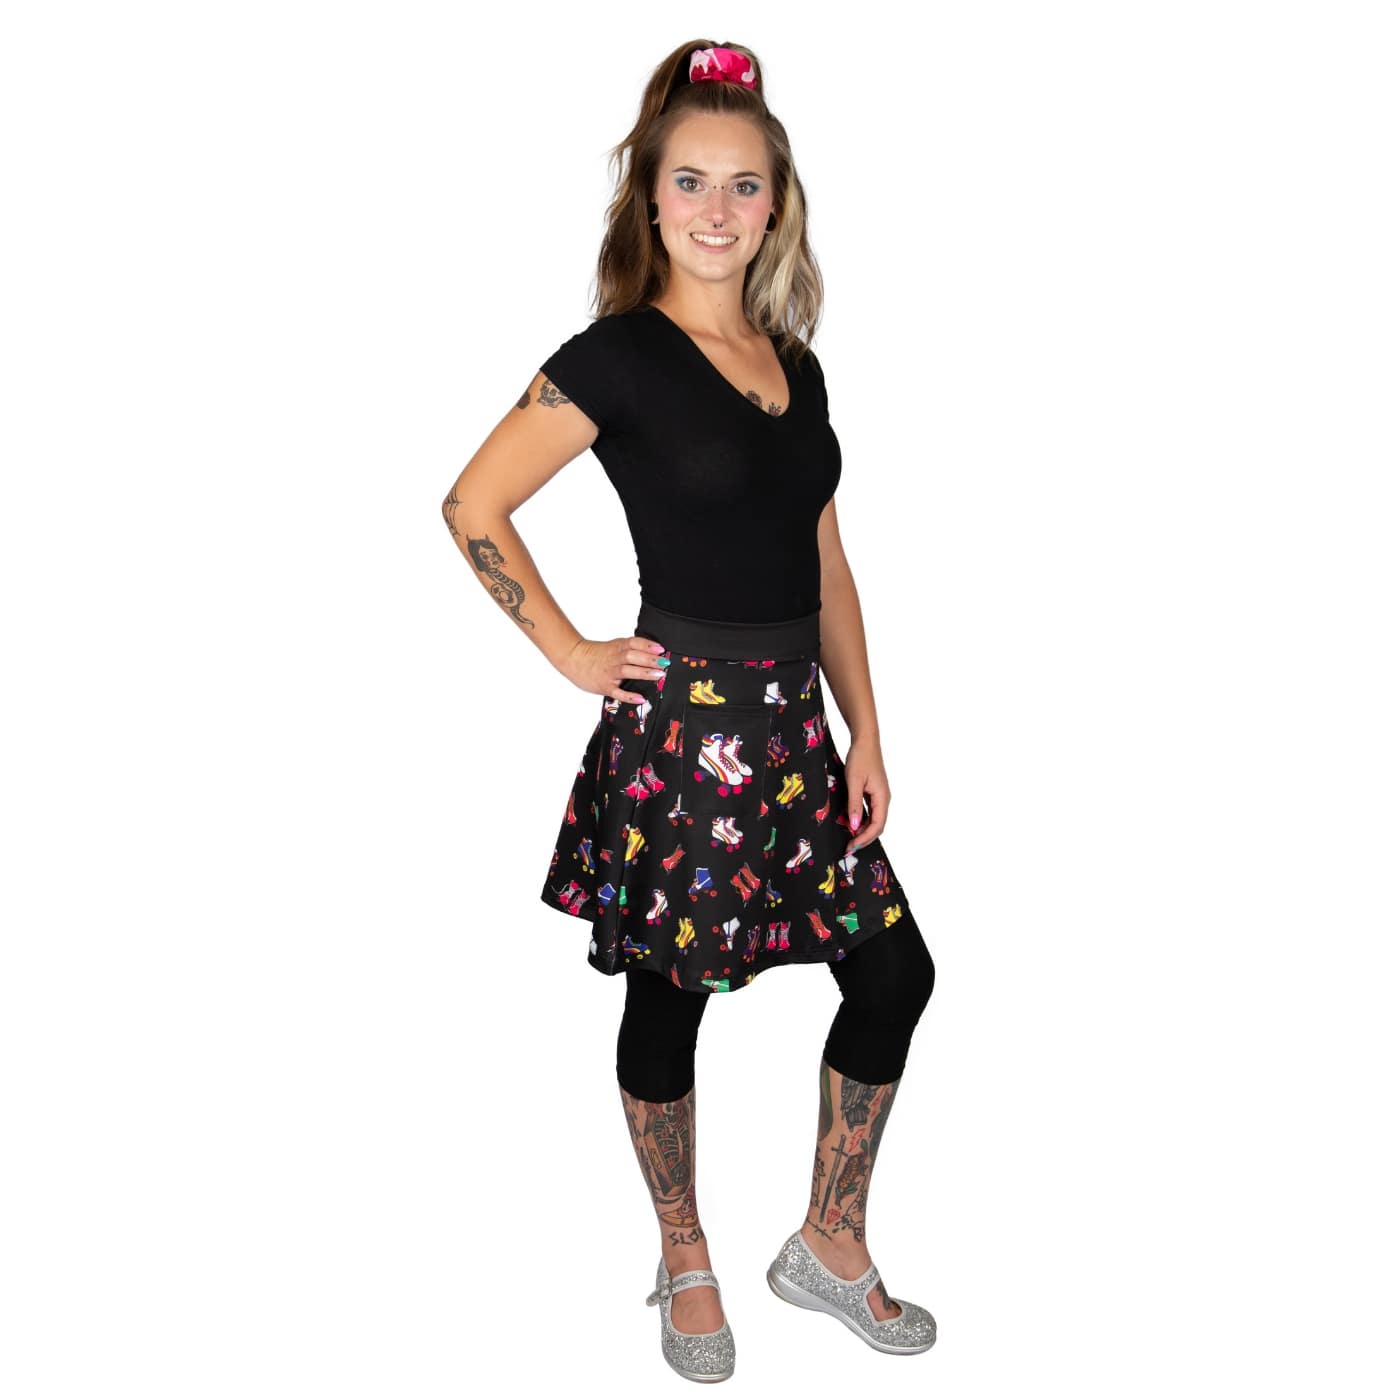 Retro Skates Short Skirt by RainbowsAndFairies.com.au (Rollerskates - Roller Derby - Skating - Kitsch - Aline Skirt With Pockets - Vintage Inspired) - SKU: CL_SHORT_RETRO_ORG - Pic-04